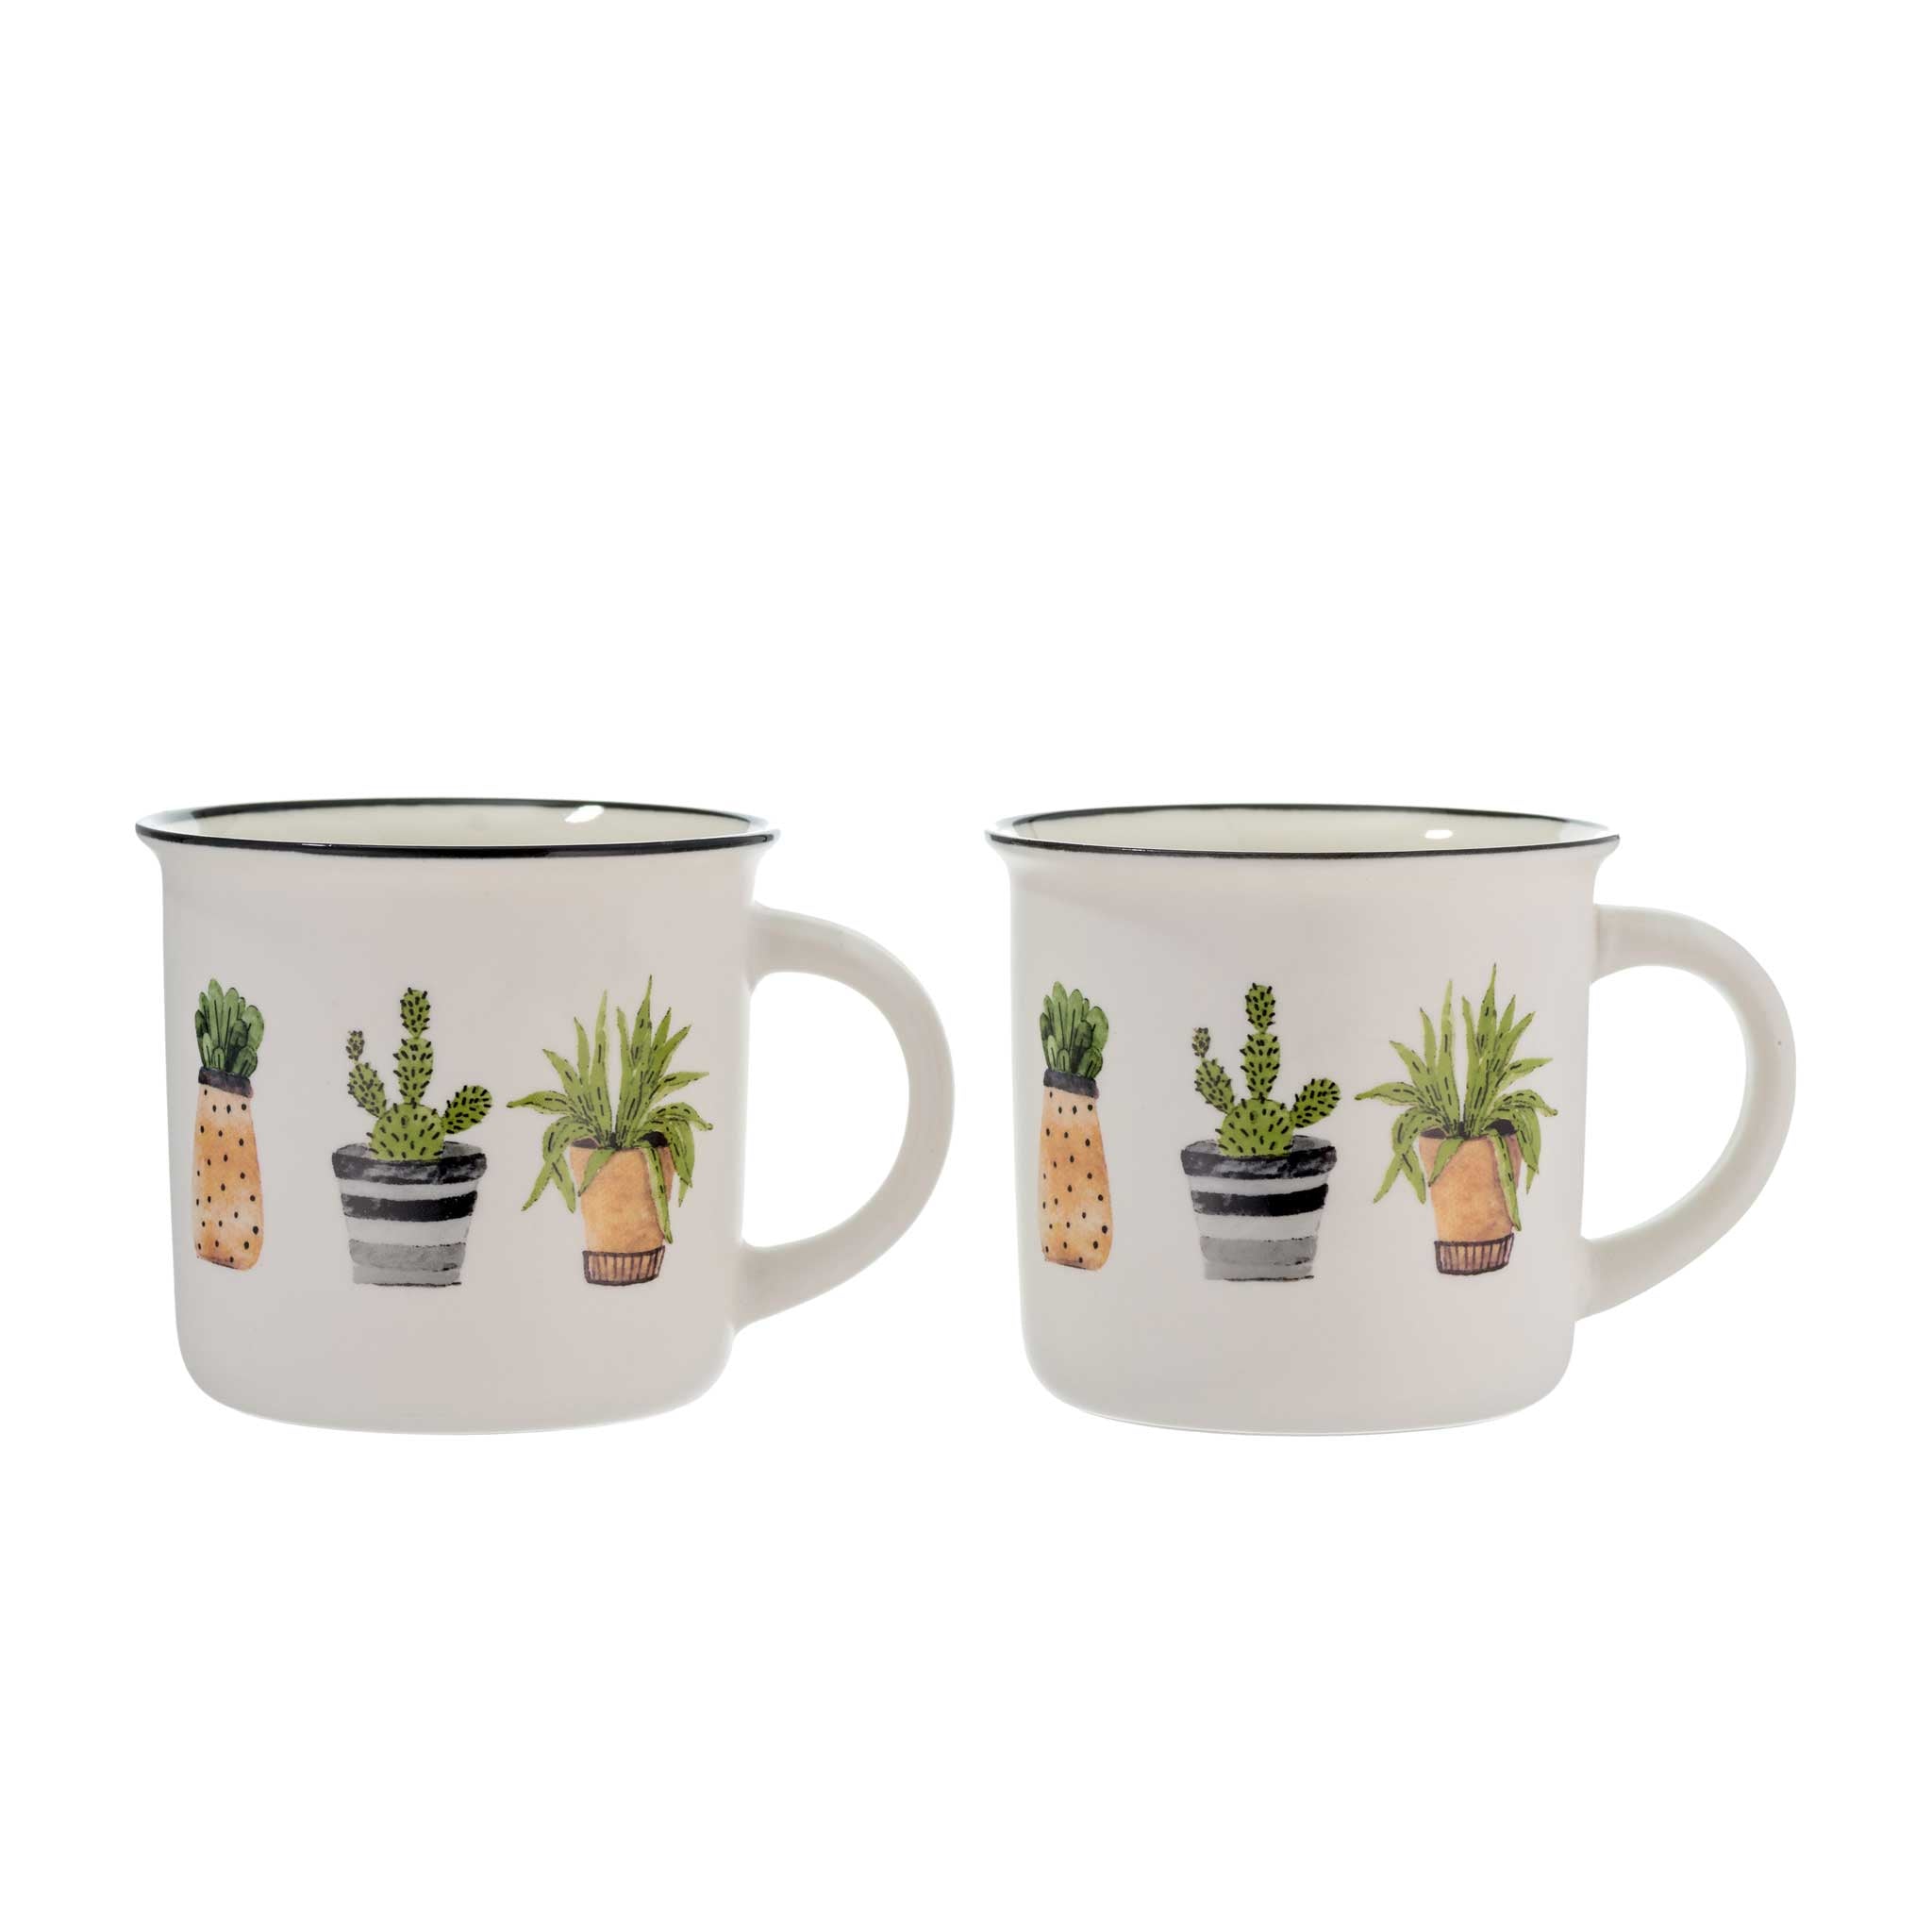 Set of 2 Cactus Mugs from China Blue